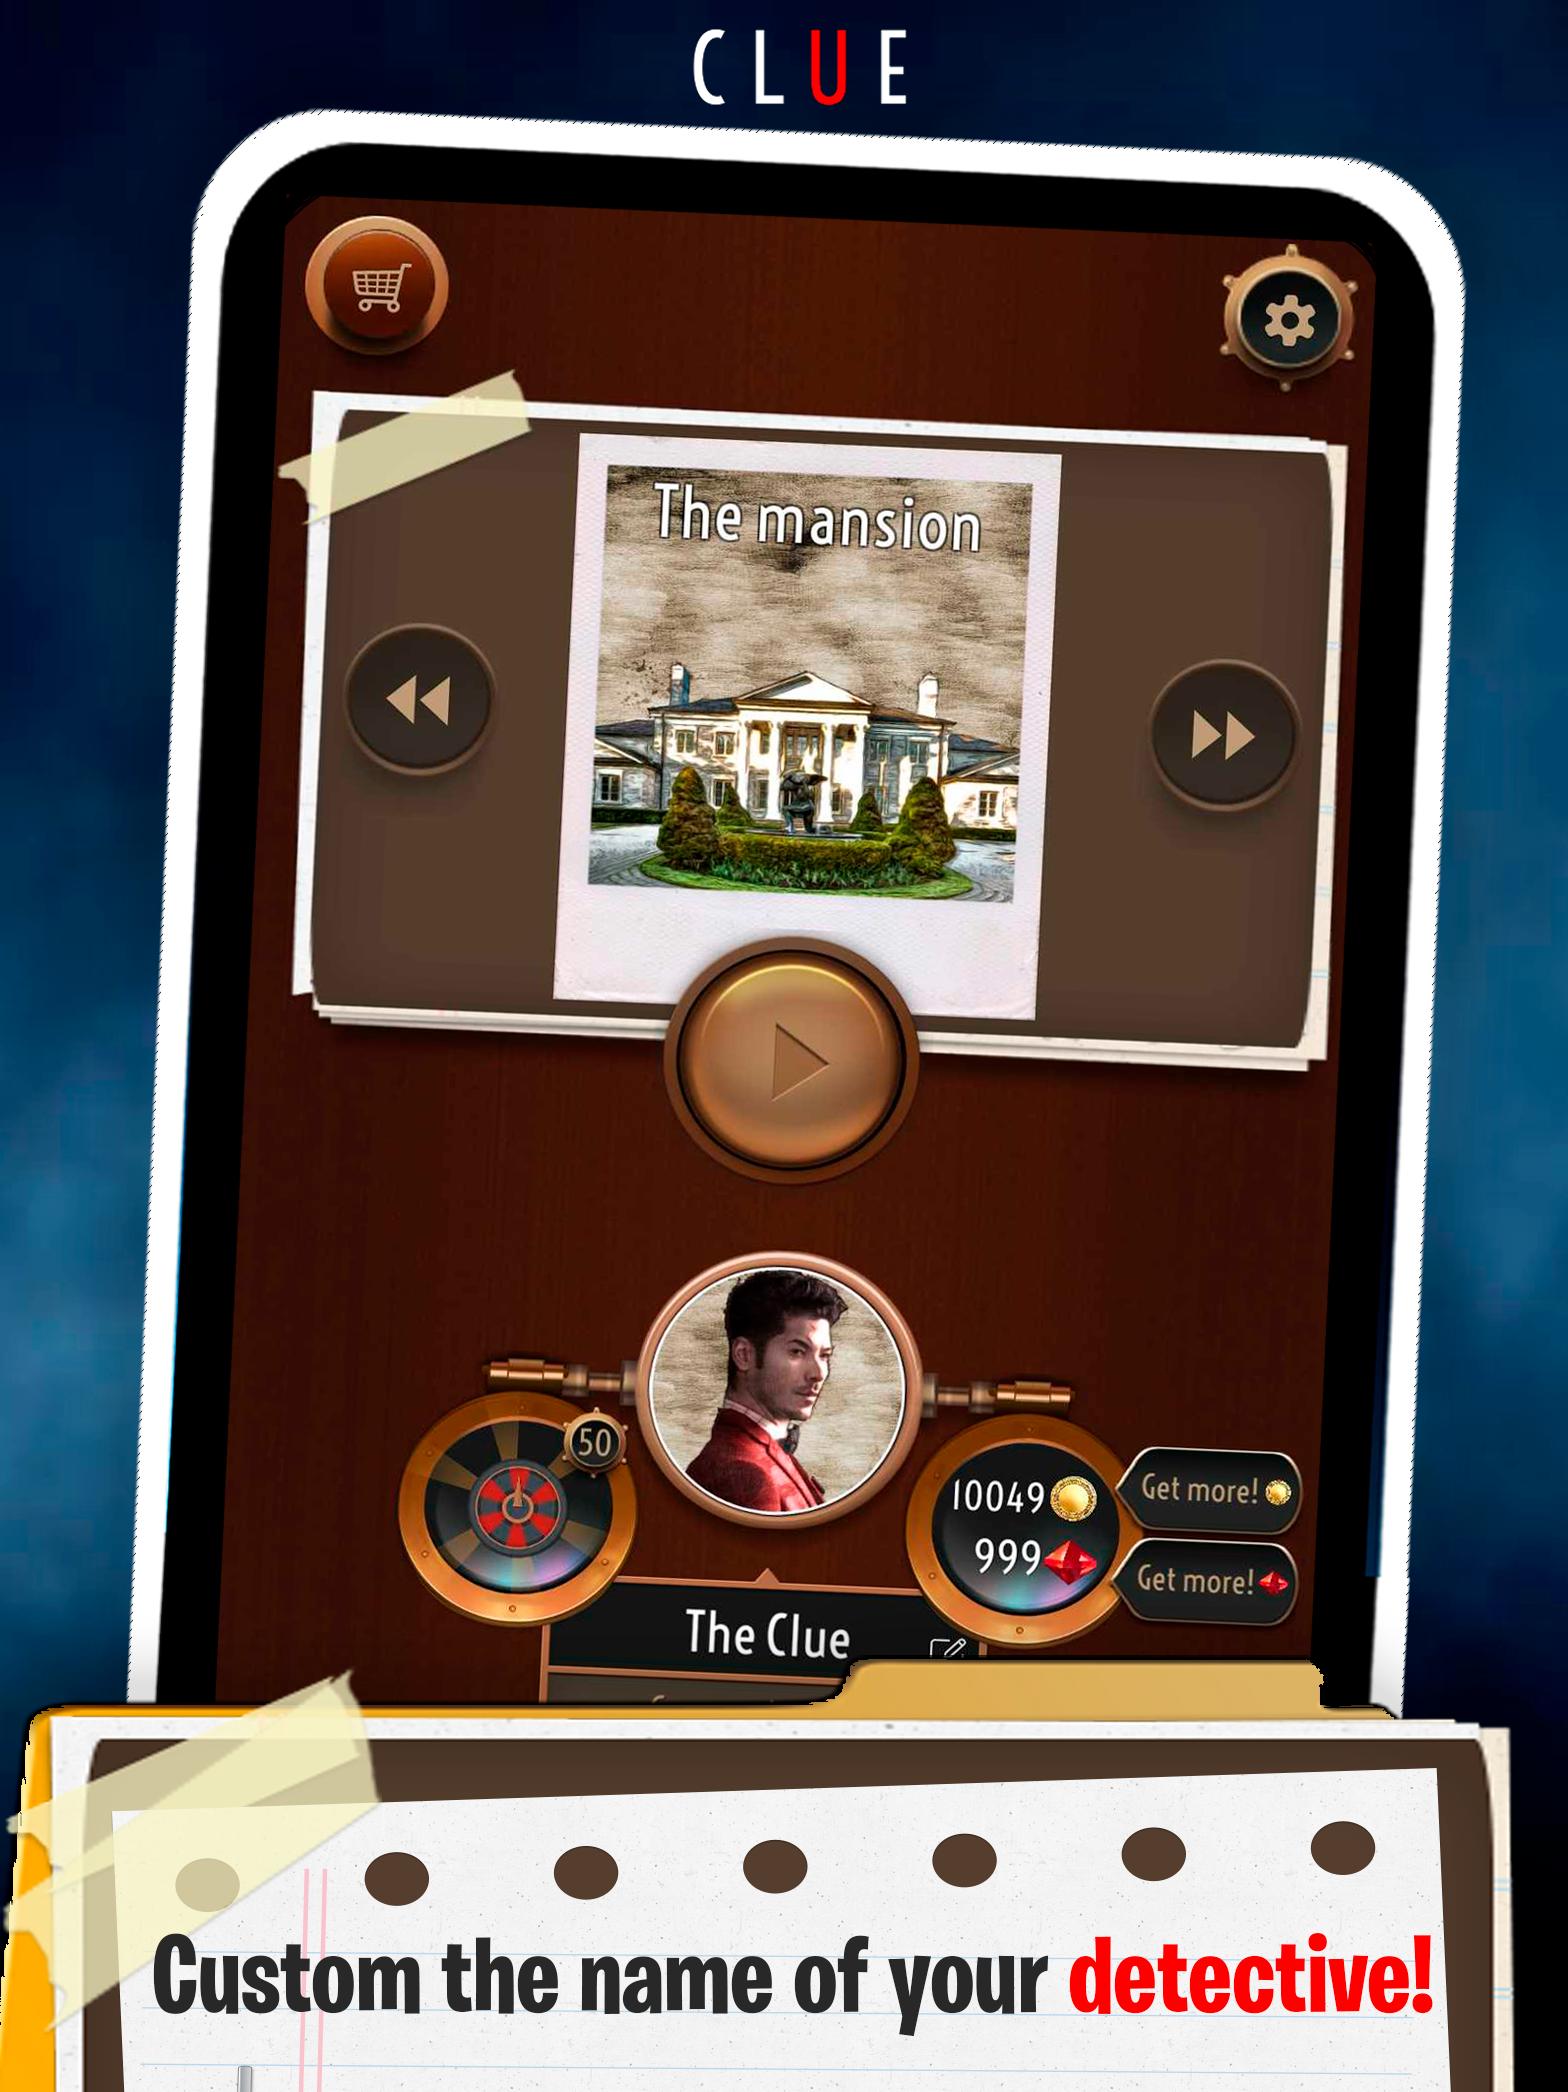 Clue Detective mystery murder criminal board game 2.3 Screenshot 14